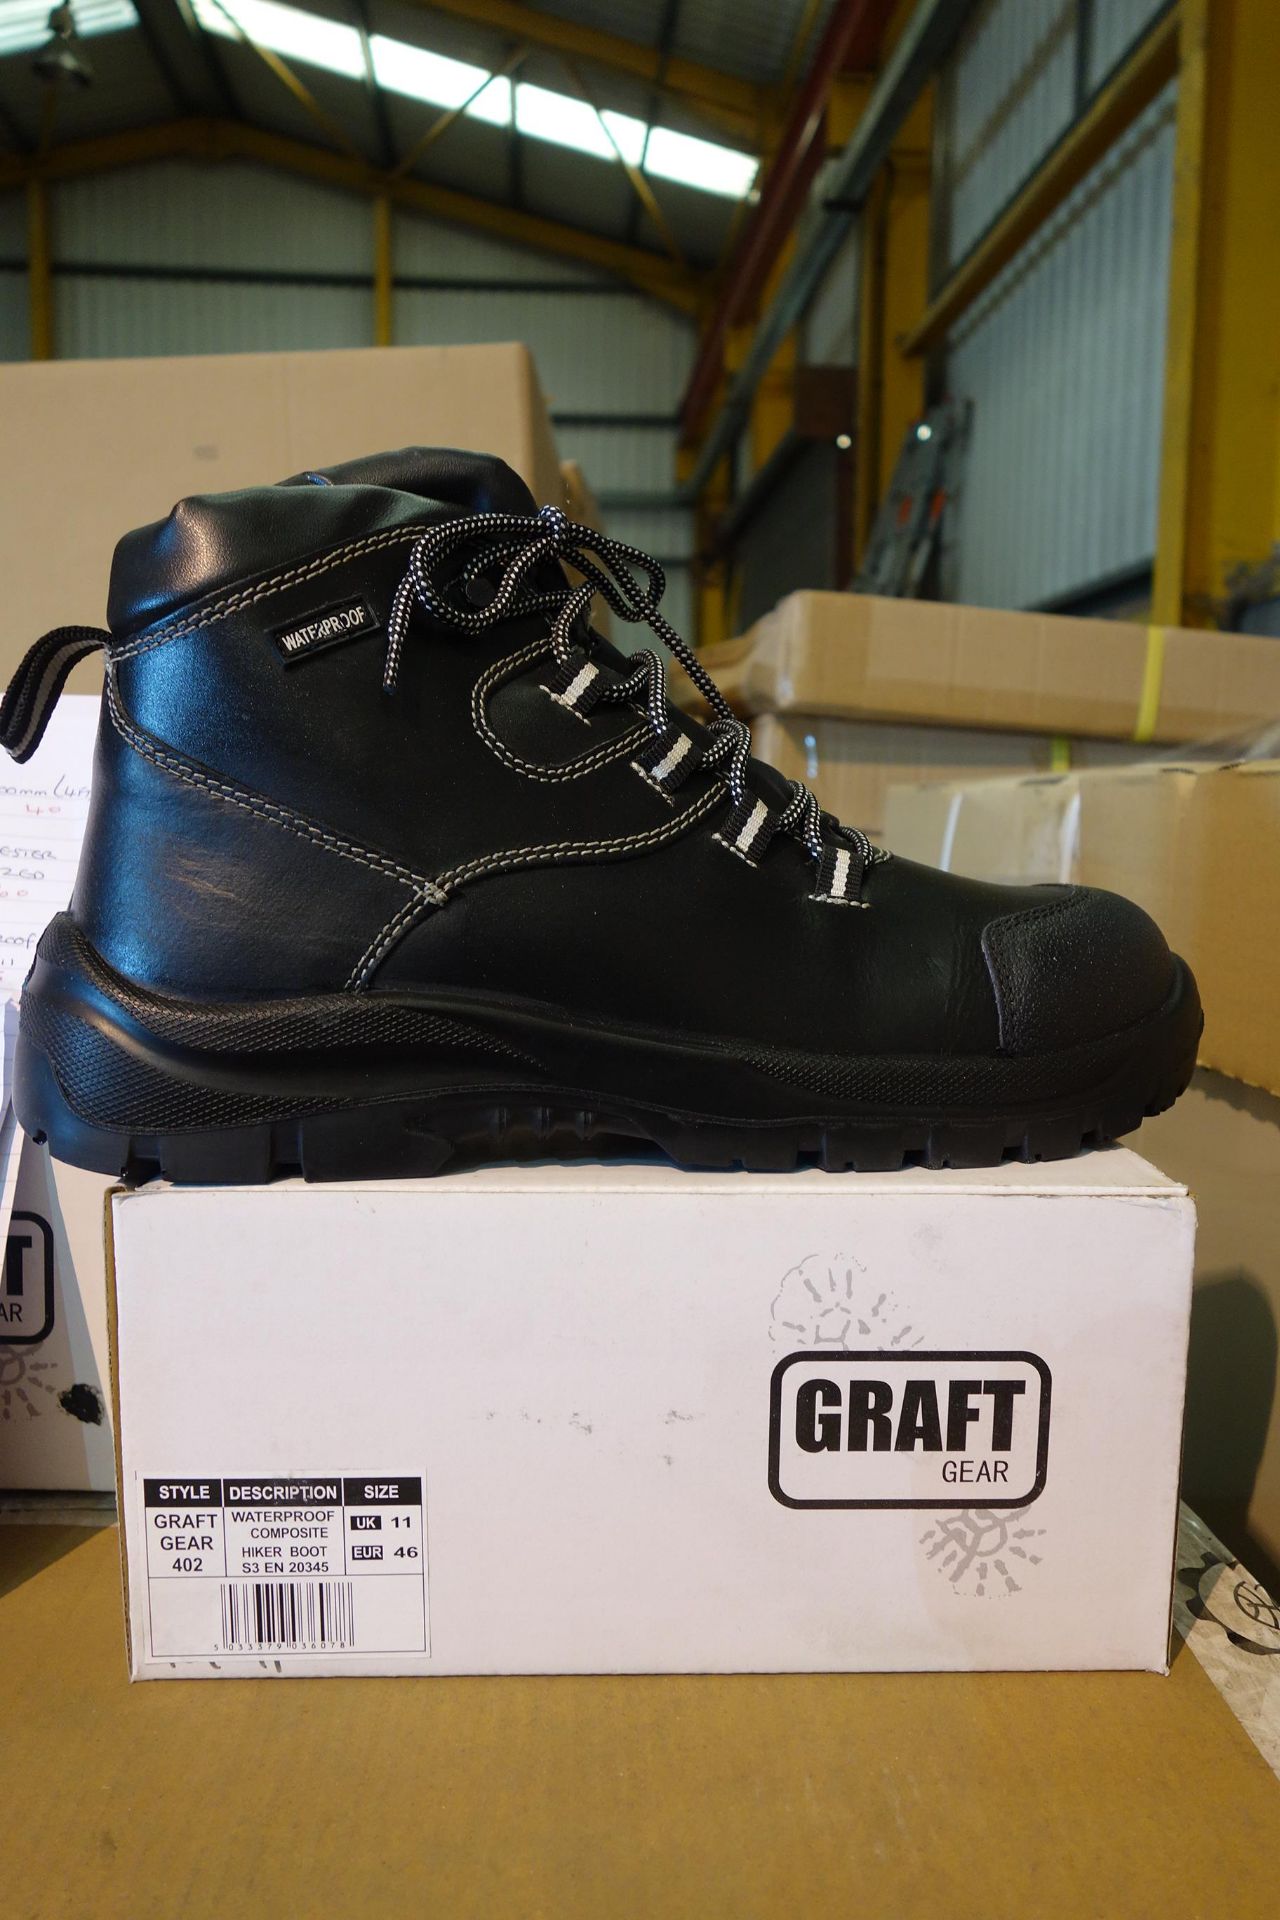 11 Pairs Of Graft Gear 402 Waterproof Composite Hiker Safty Boots Size UK11 EUR 46 Black